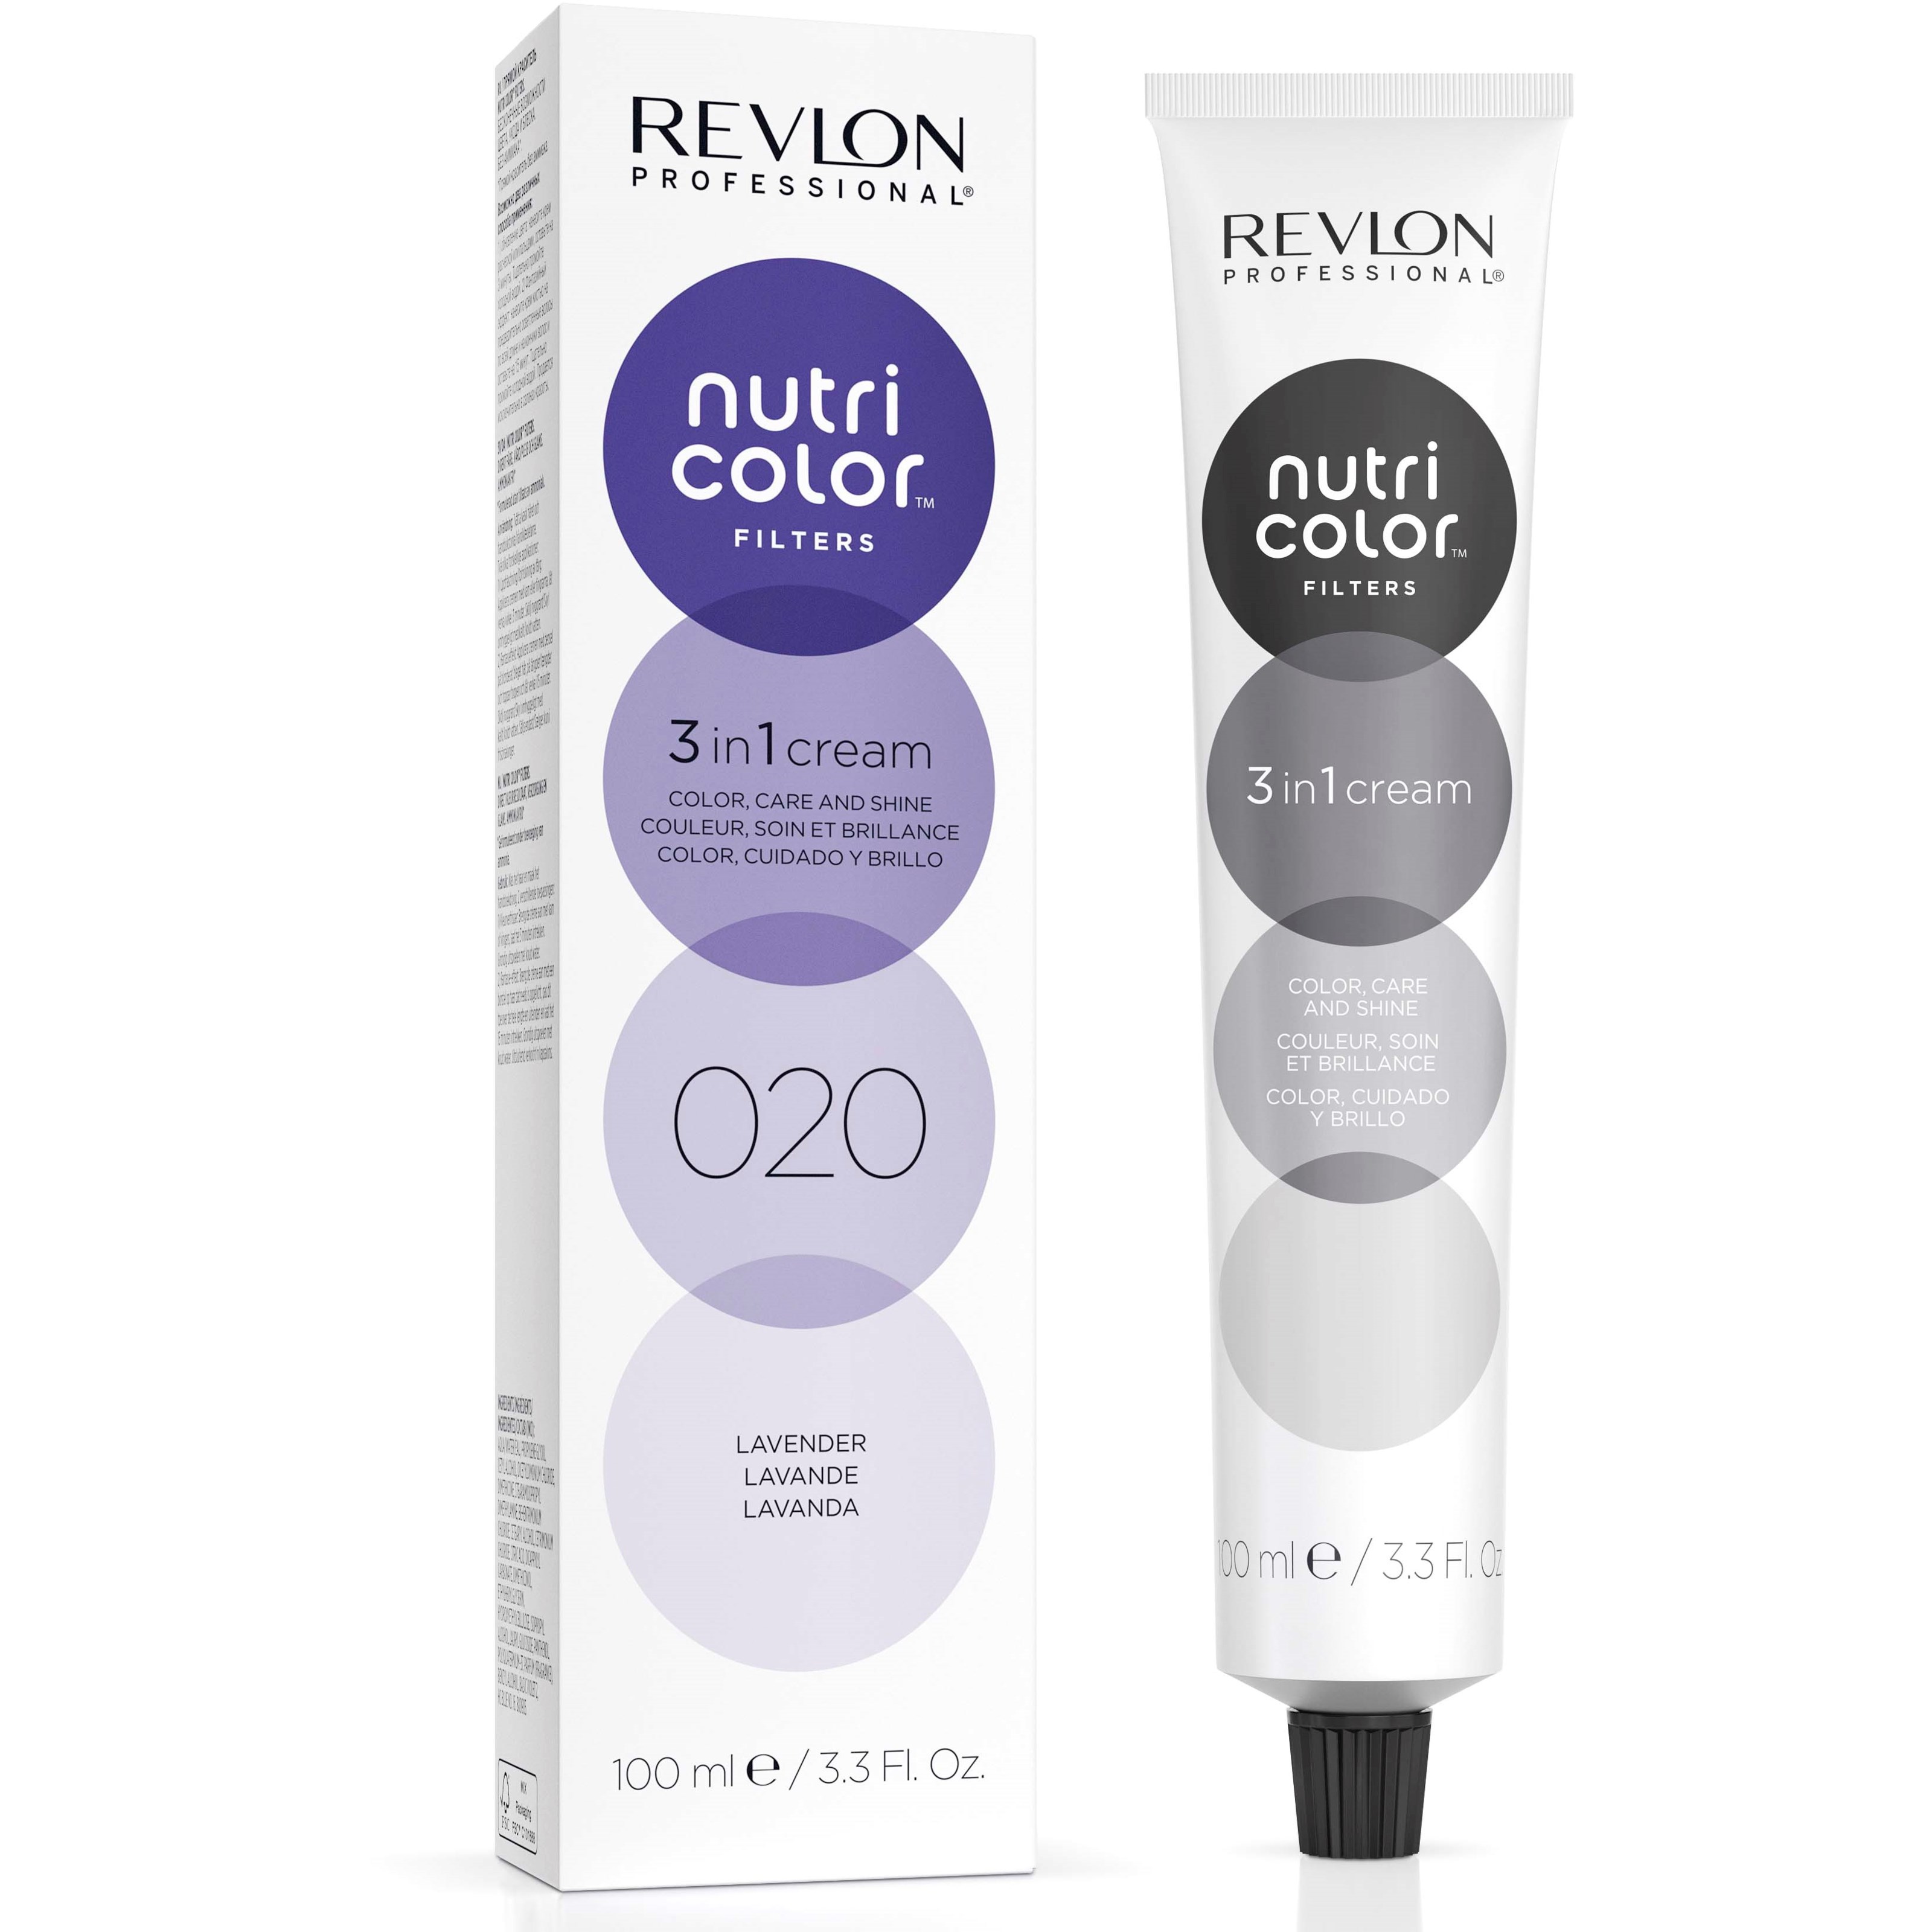 Bilde av Revlon Nutri Color Filters 3-in-1 Cream 020 Lavender